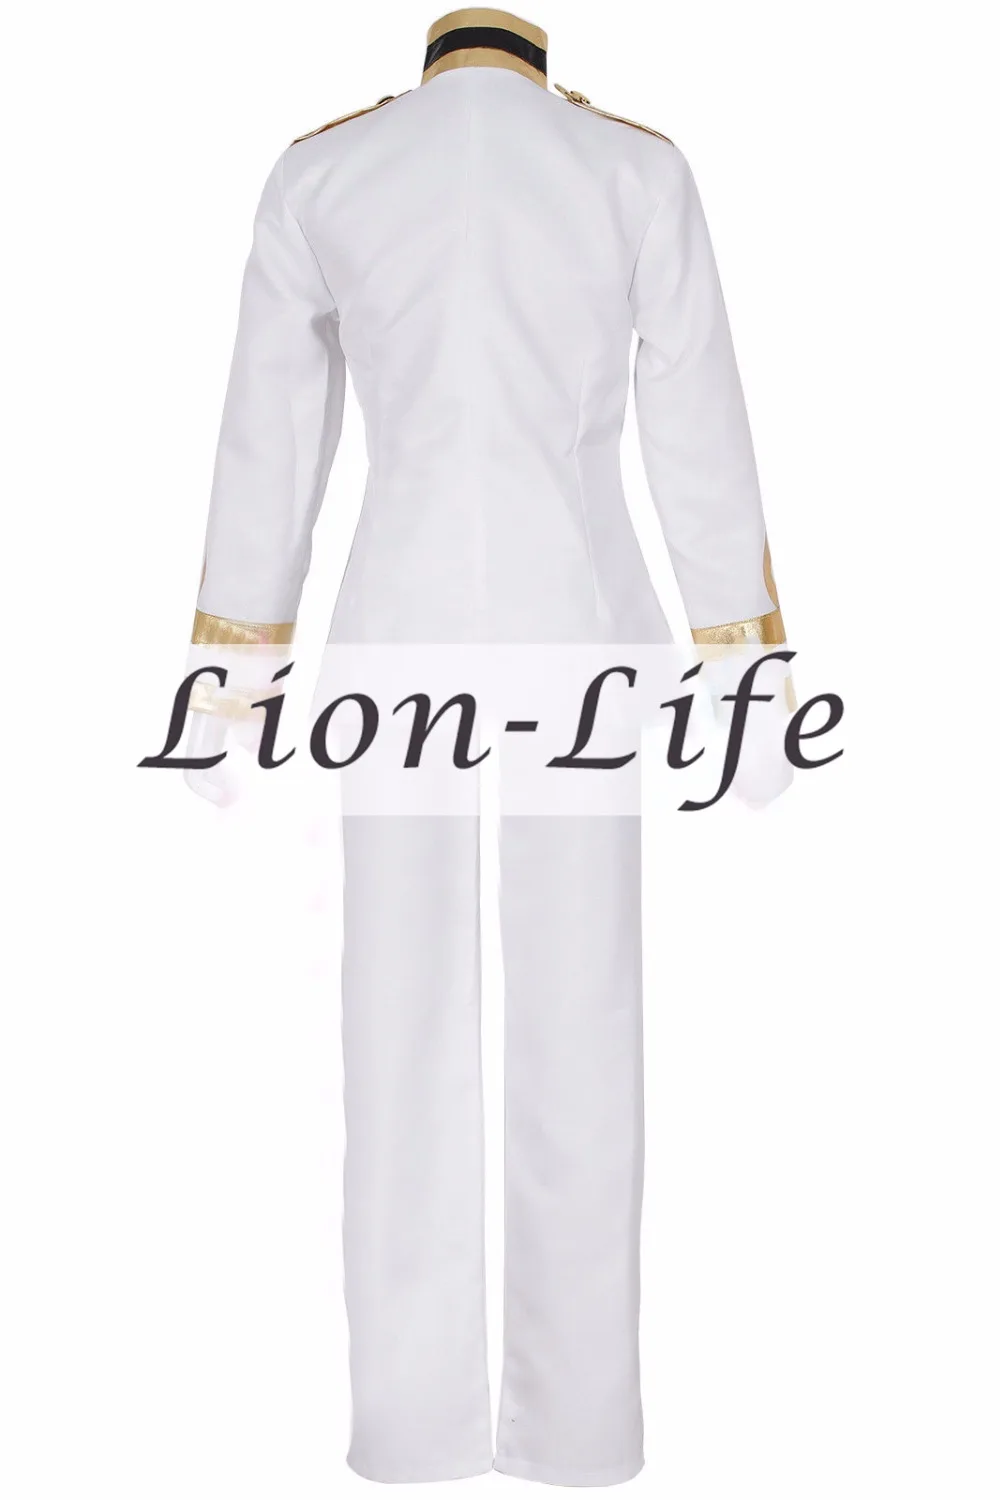 APH Axis Powers Hetalia Japan Honda Kiku White Uniform Cosplay Costume Cosonsen4 